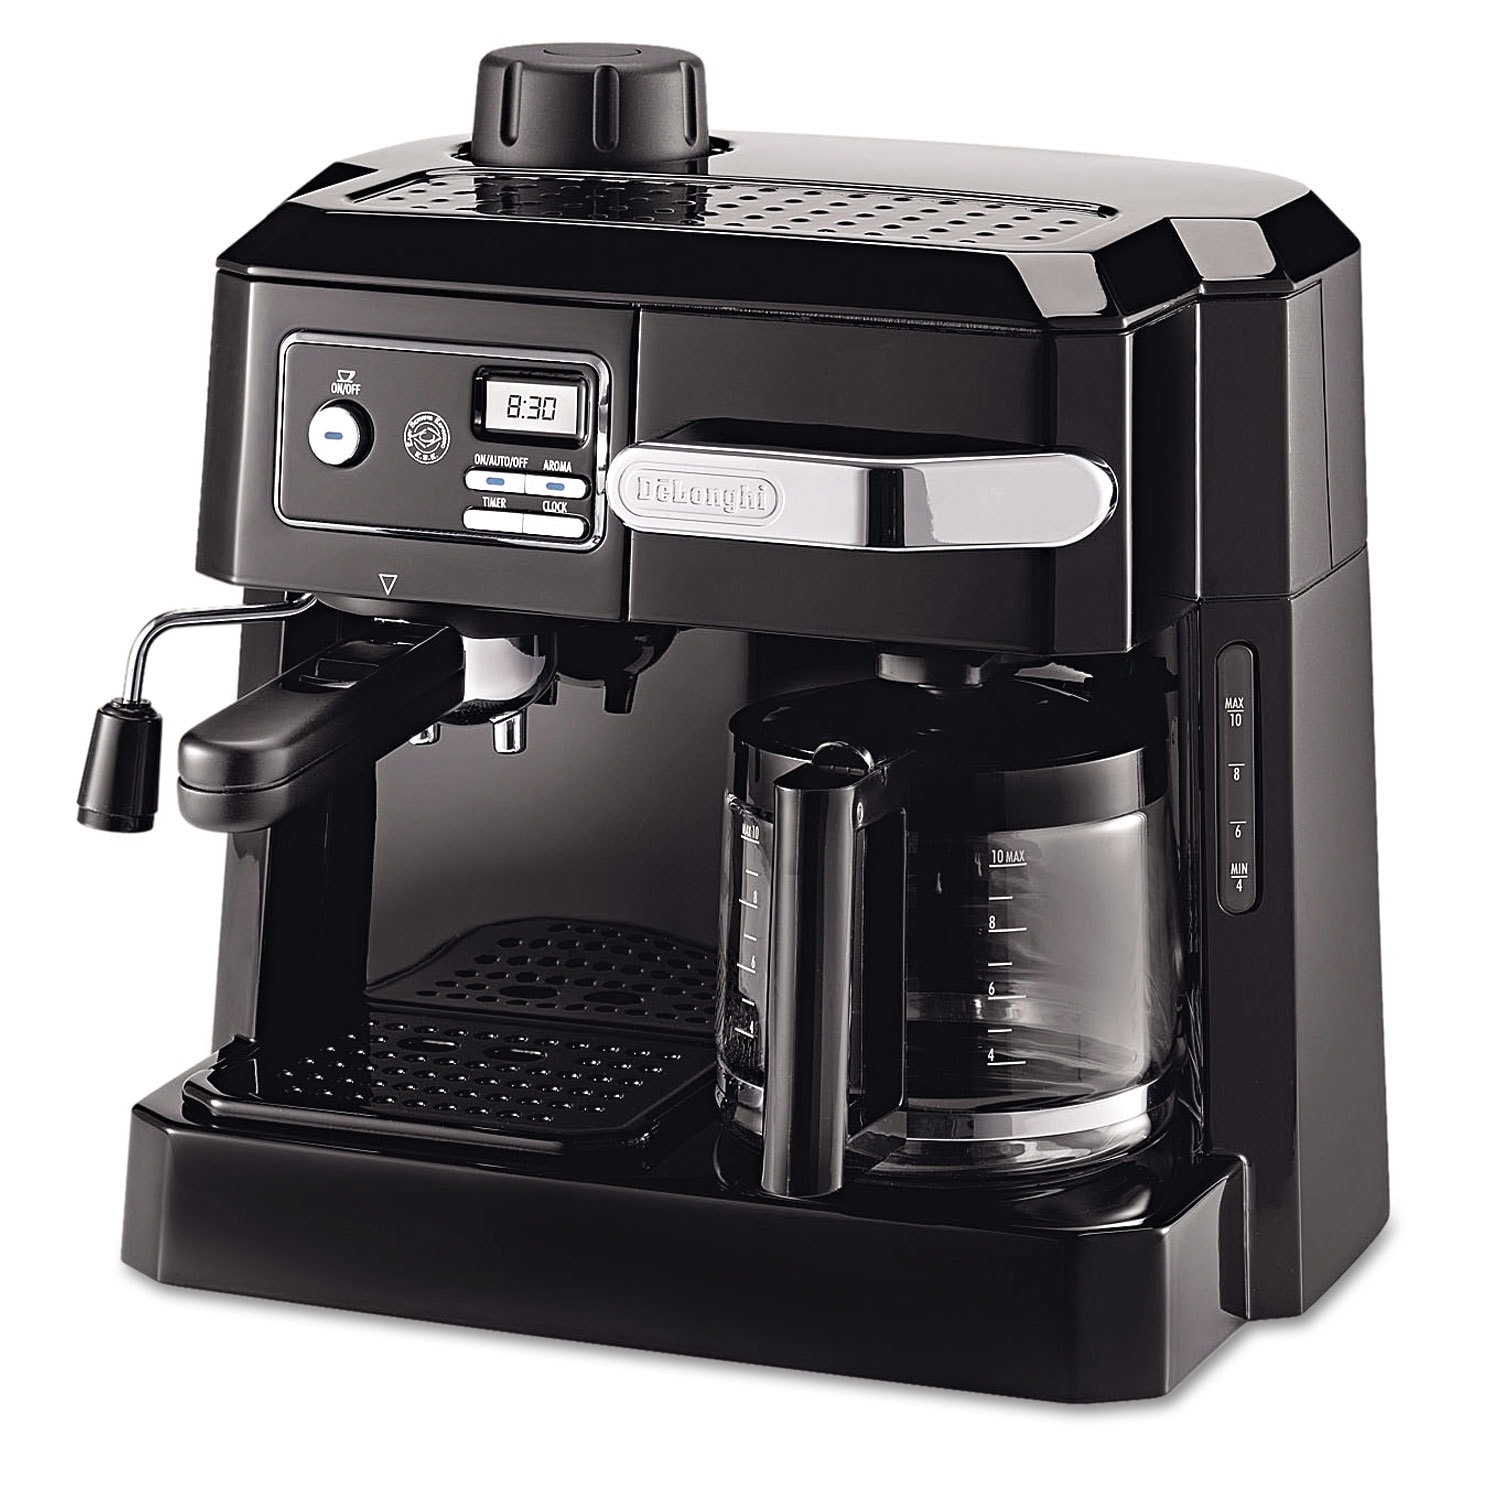 https://ak1.ostkcdn.com/images/products/10520601/DeLONGHI-BCO320T-Combination-Black-Silver-Coffee-Espresso-Machine-748d3189-6efd-470d-85a0-117e797a1696.jpg